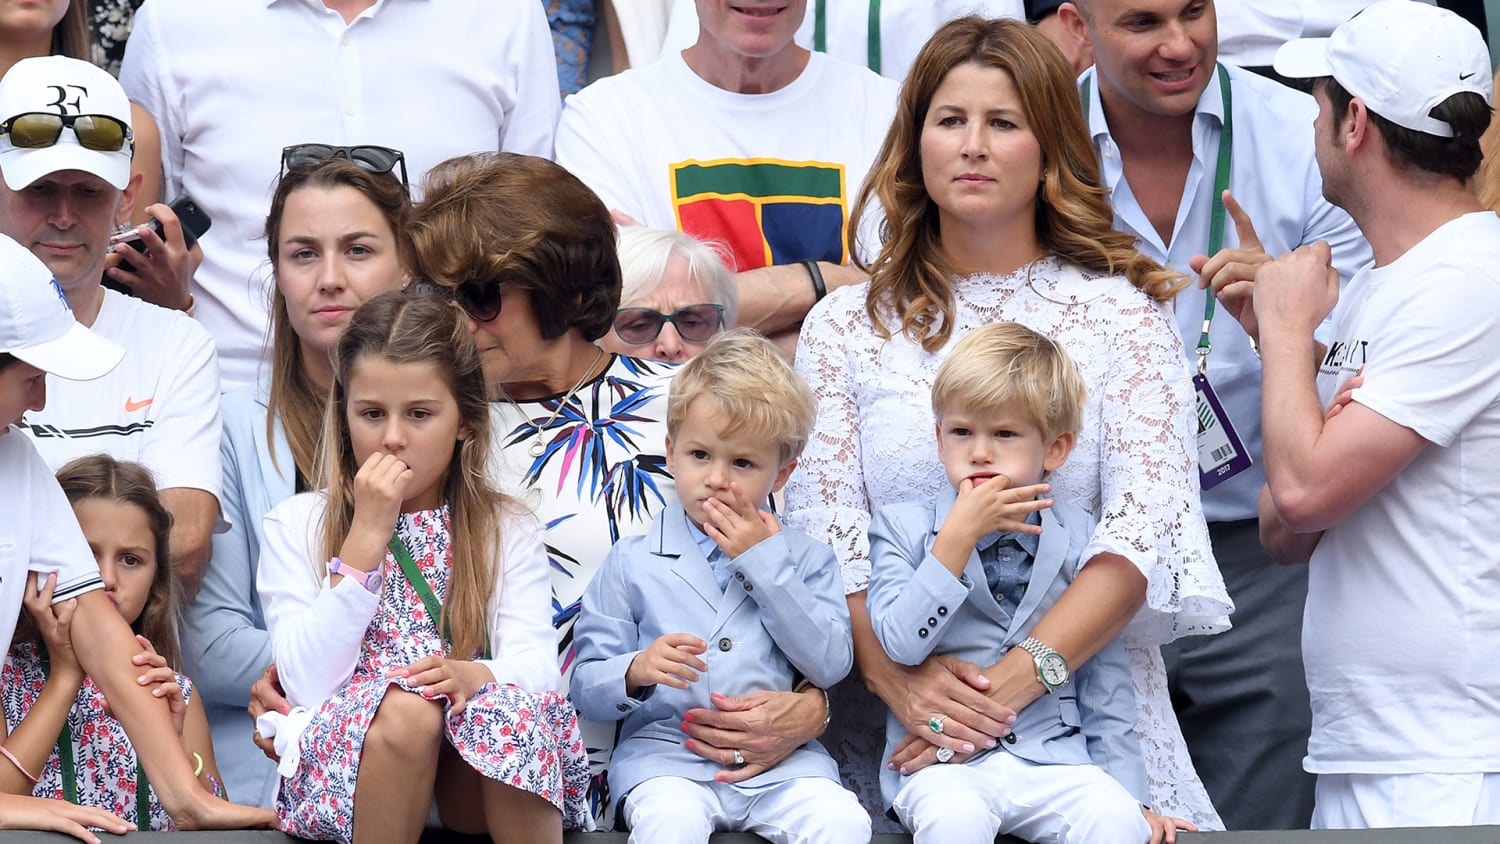 Roger Federer’s kids are the cutest fans at Wimbledon men’s final - TODAY.com1920 x 1080